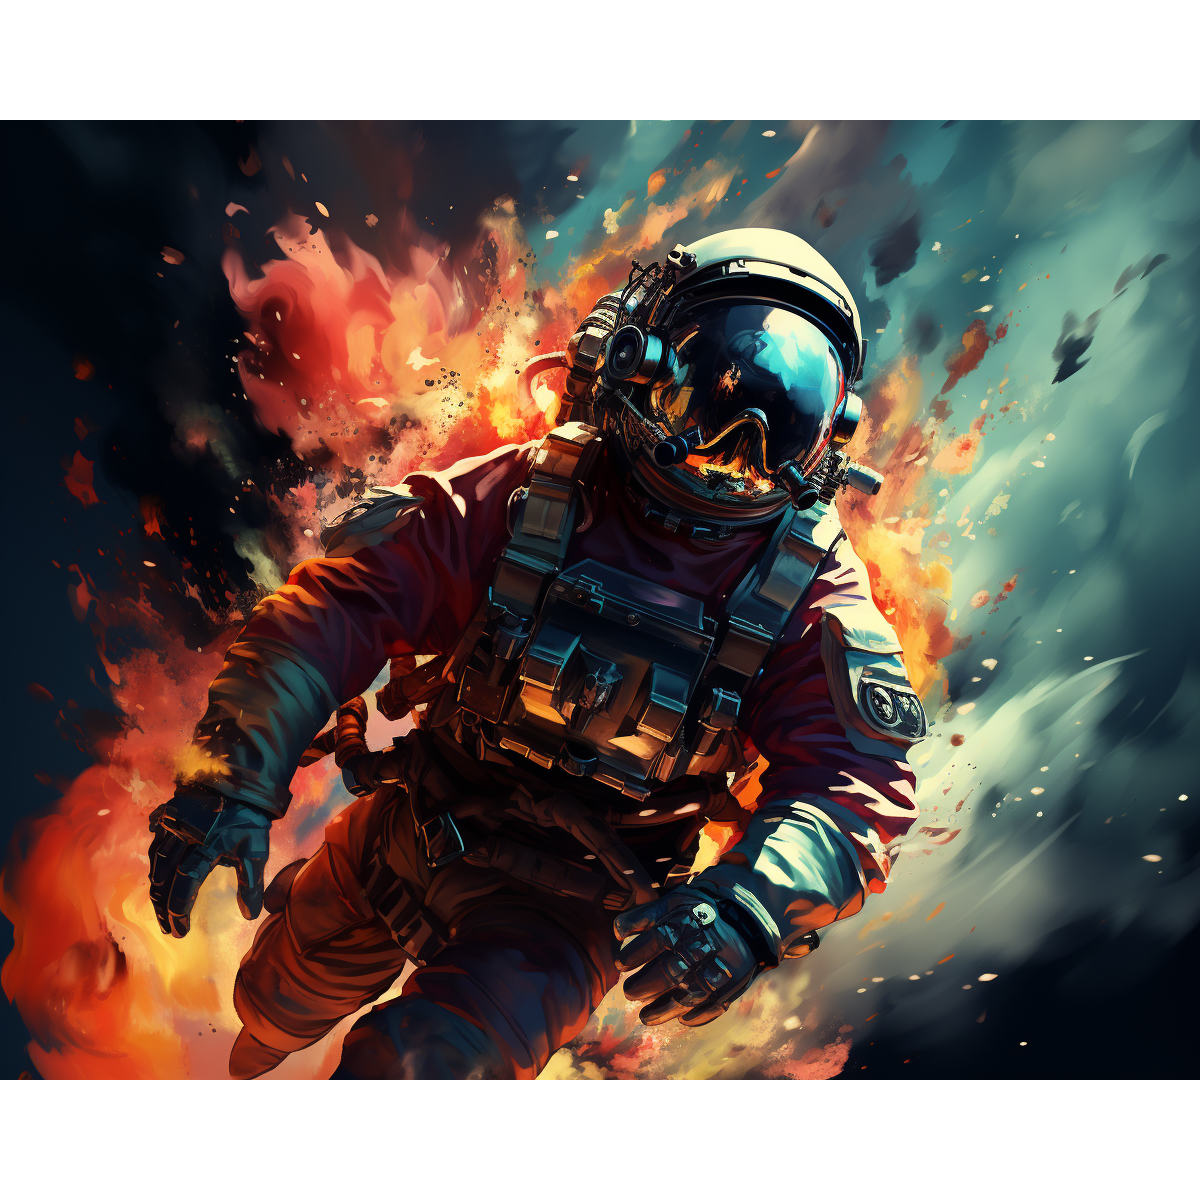 Flaming Astronaut